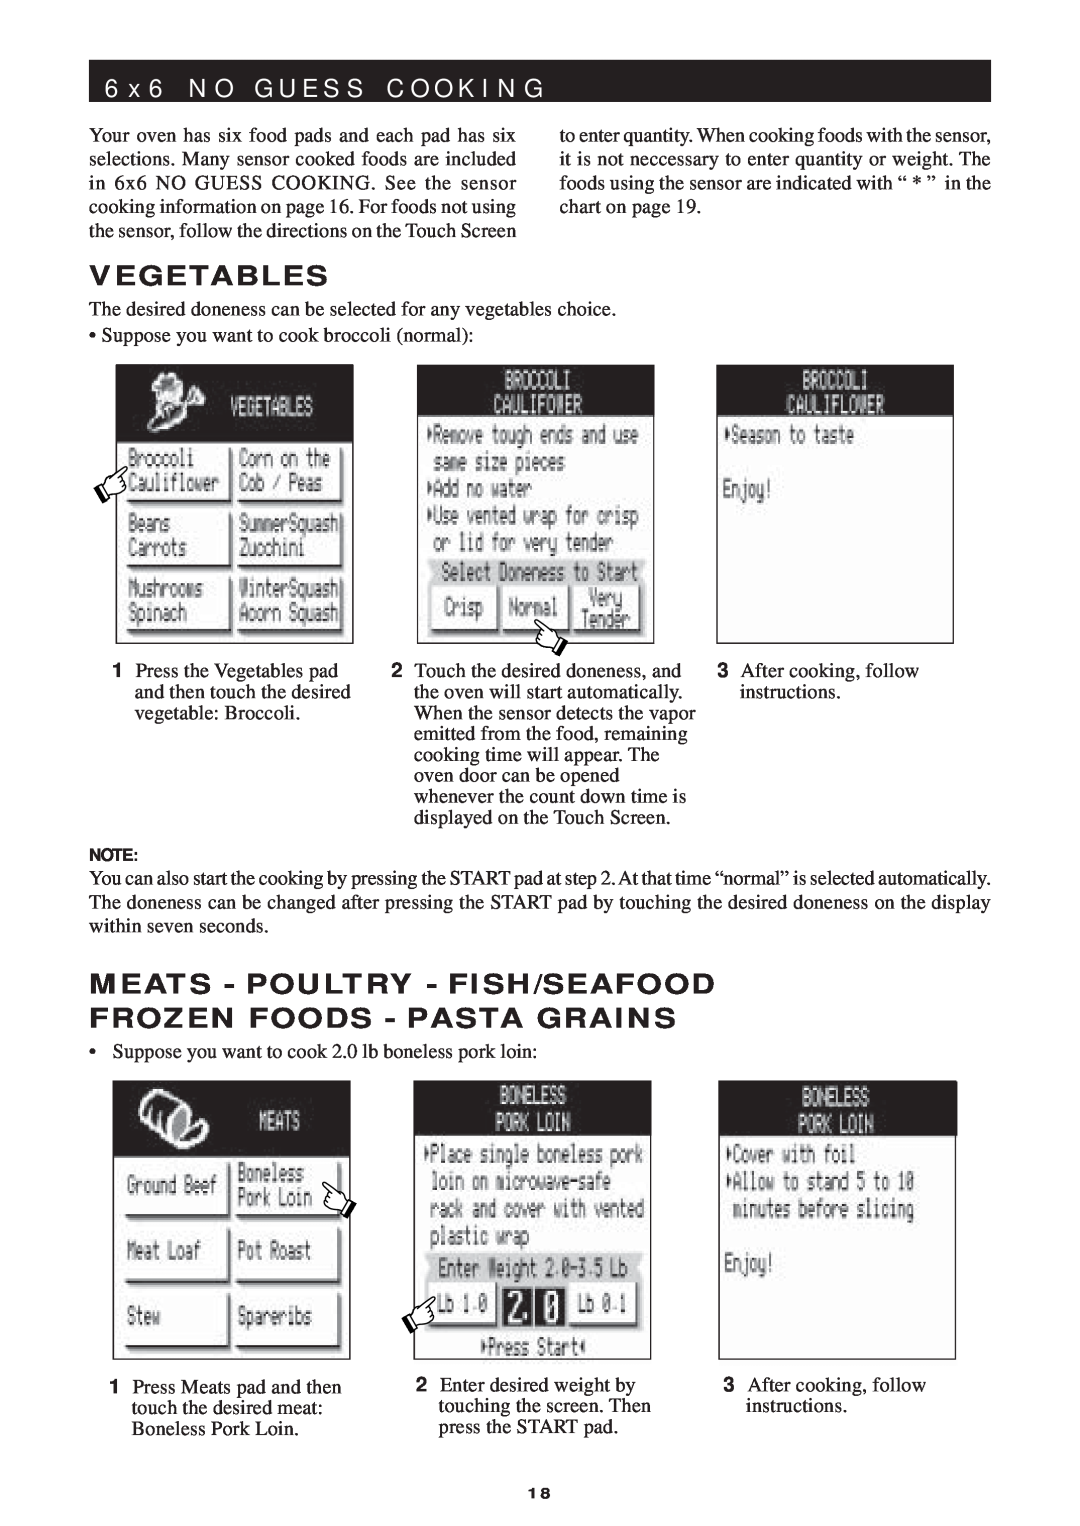 Sharp R-1751 6 x 6 N O G U E S S C O O K I N G, Vegetables, Meats - Poultry - Fish/Seafood, Frozen Foods - Pasta Grains 